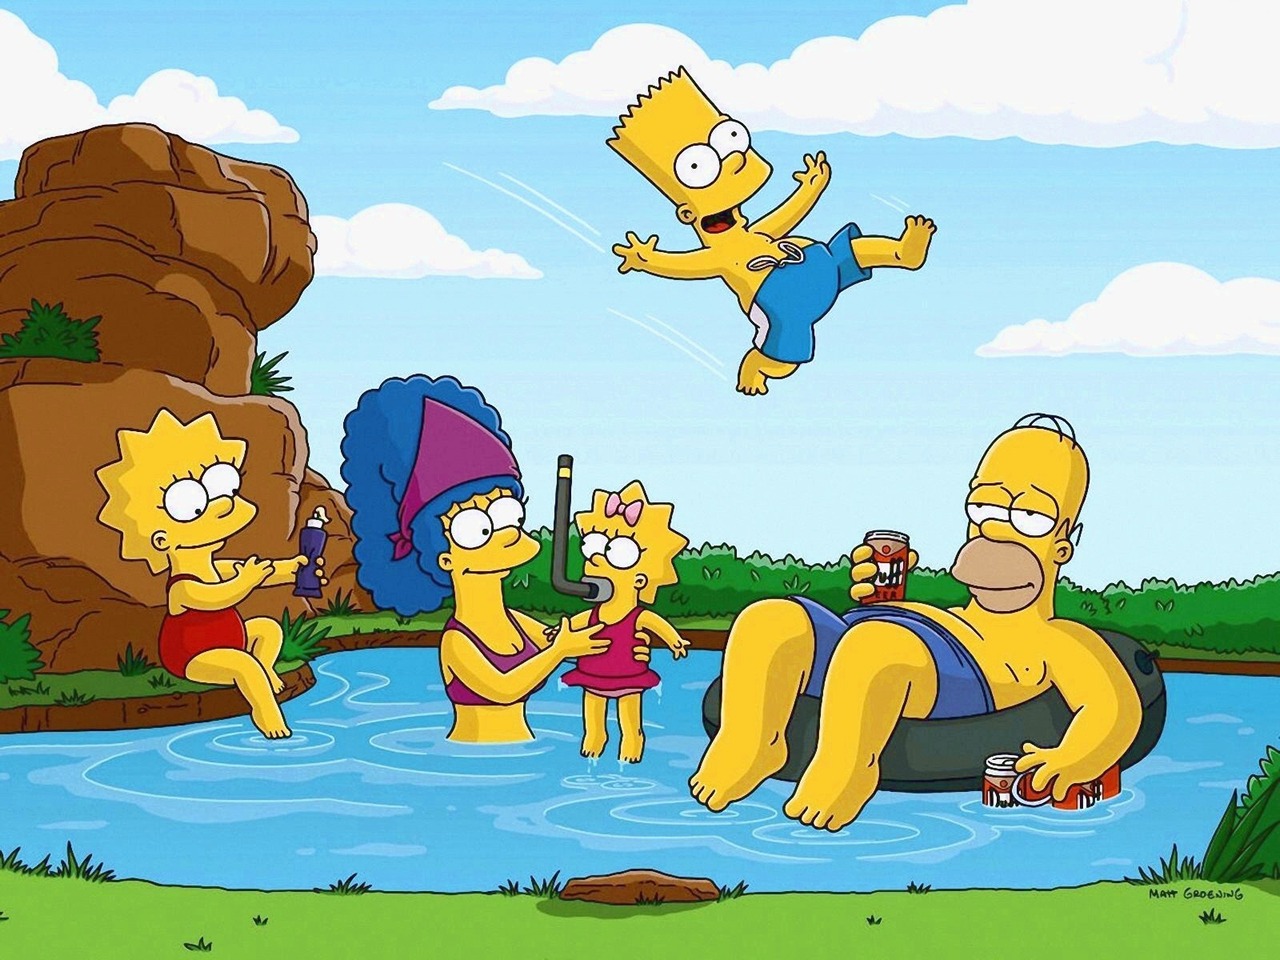 "The Simpsons" desktop wallpaper (1280 x 960 pixels)